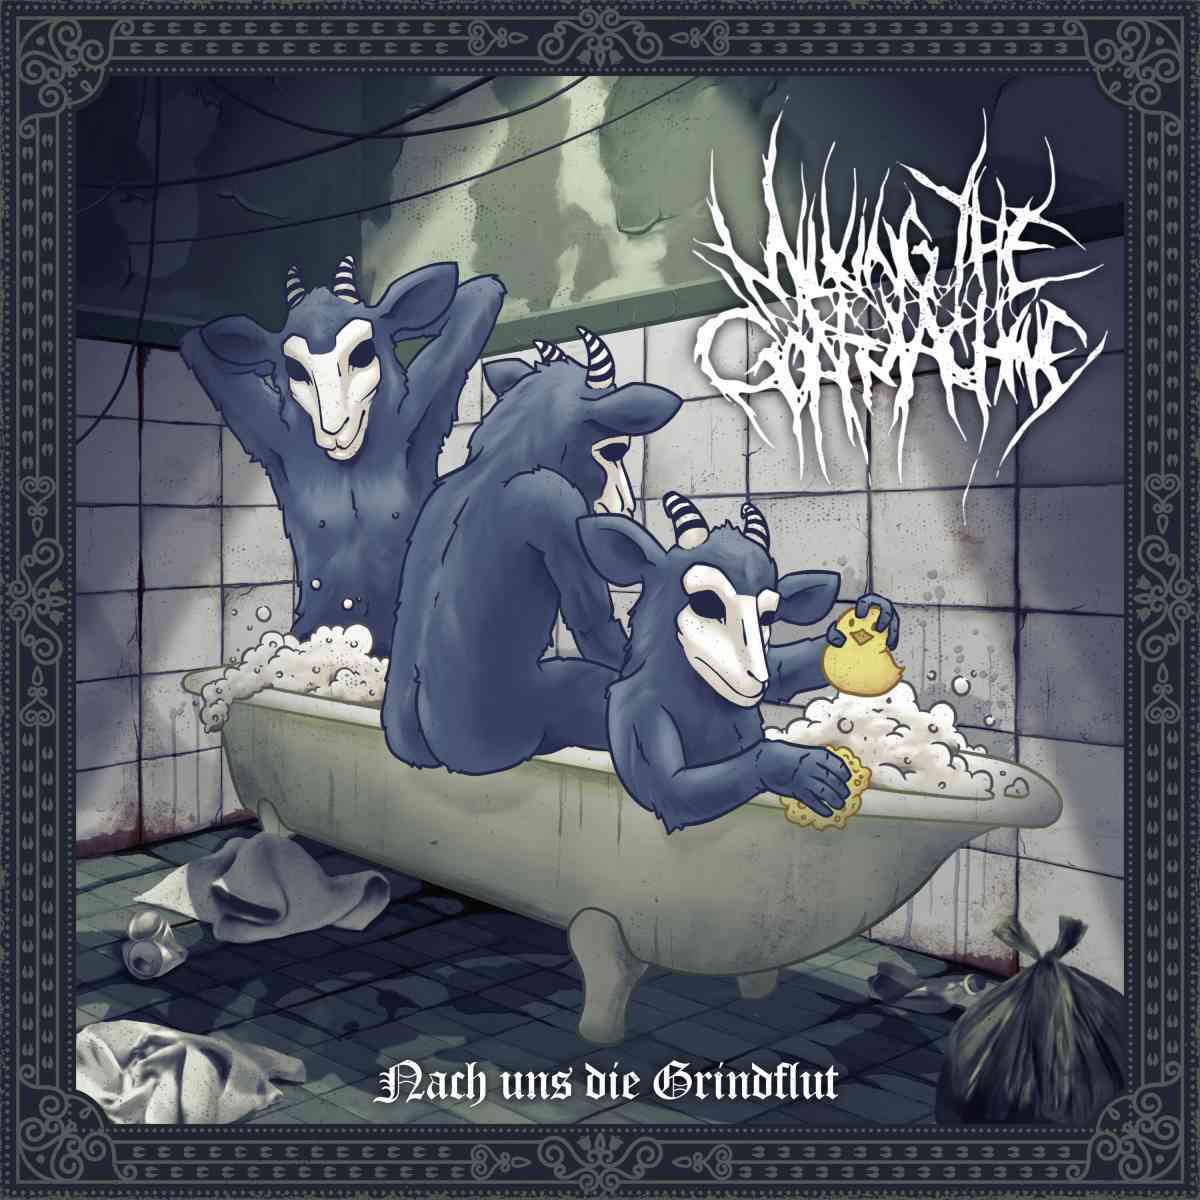 milking the goatmachine - nach uns die grindflut - album cover